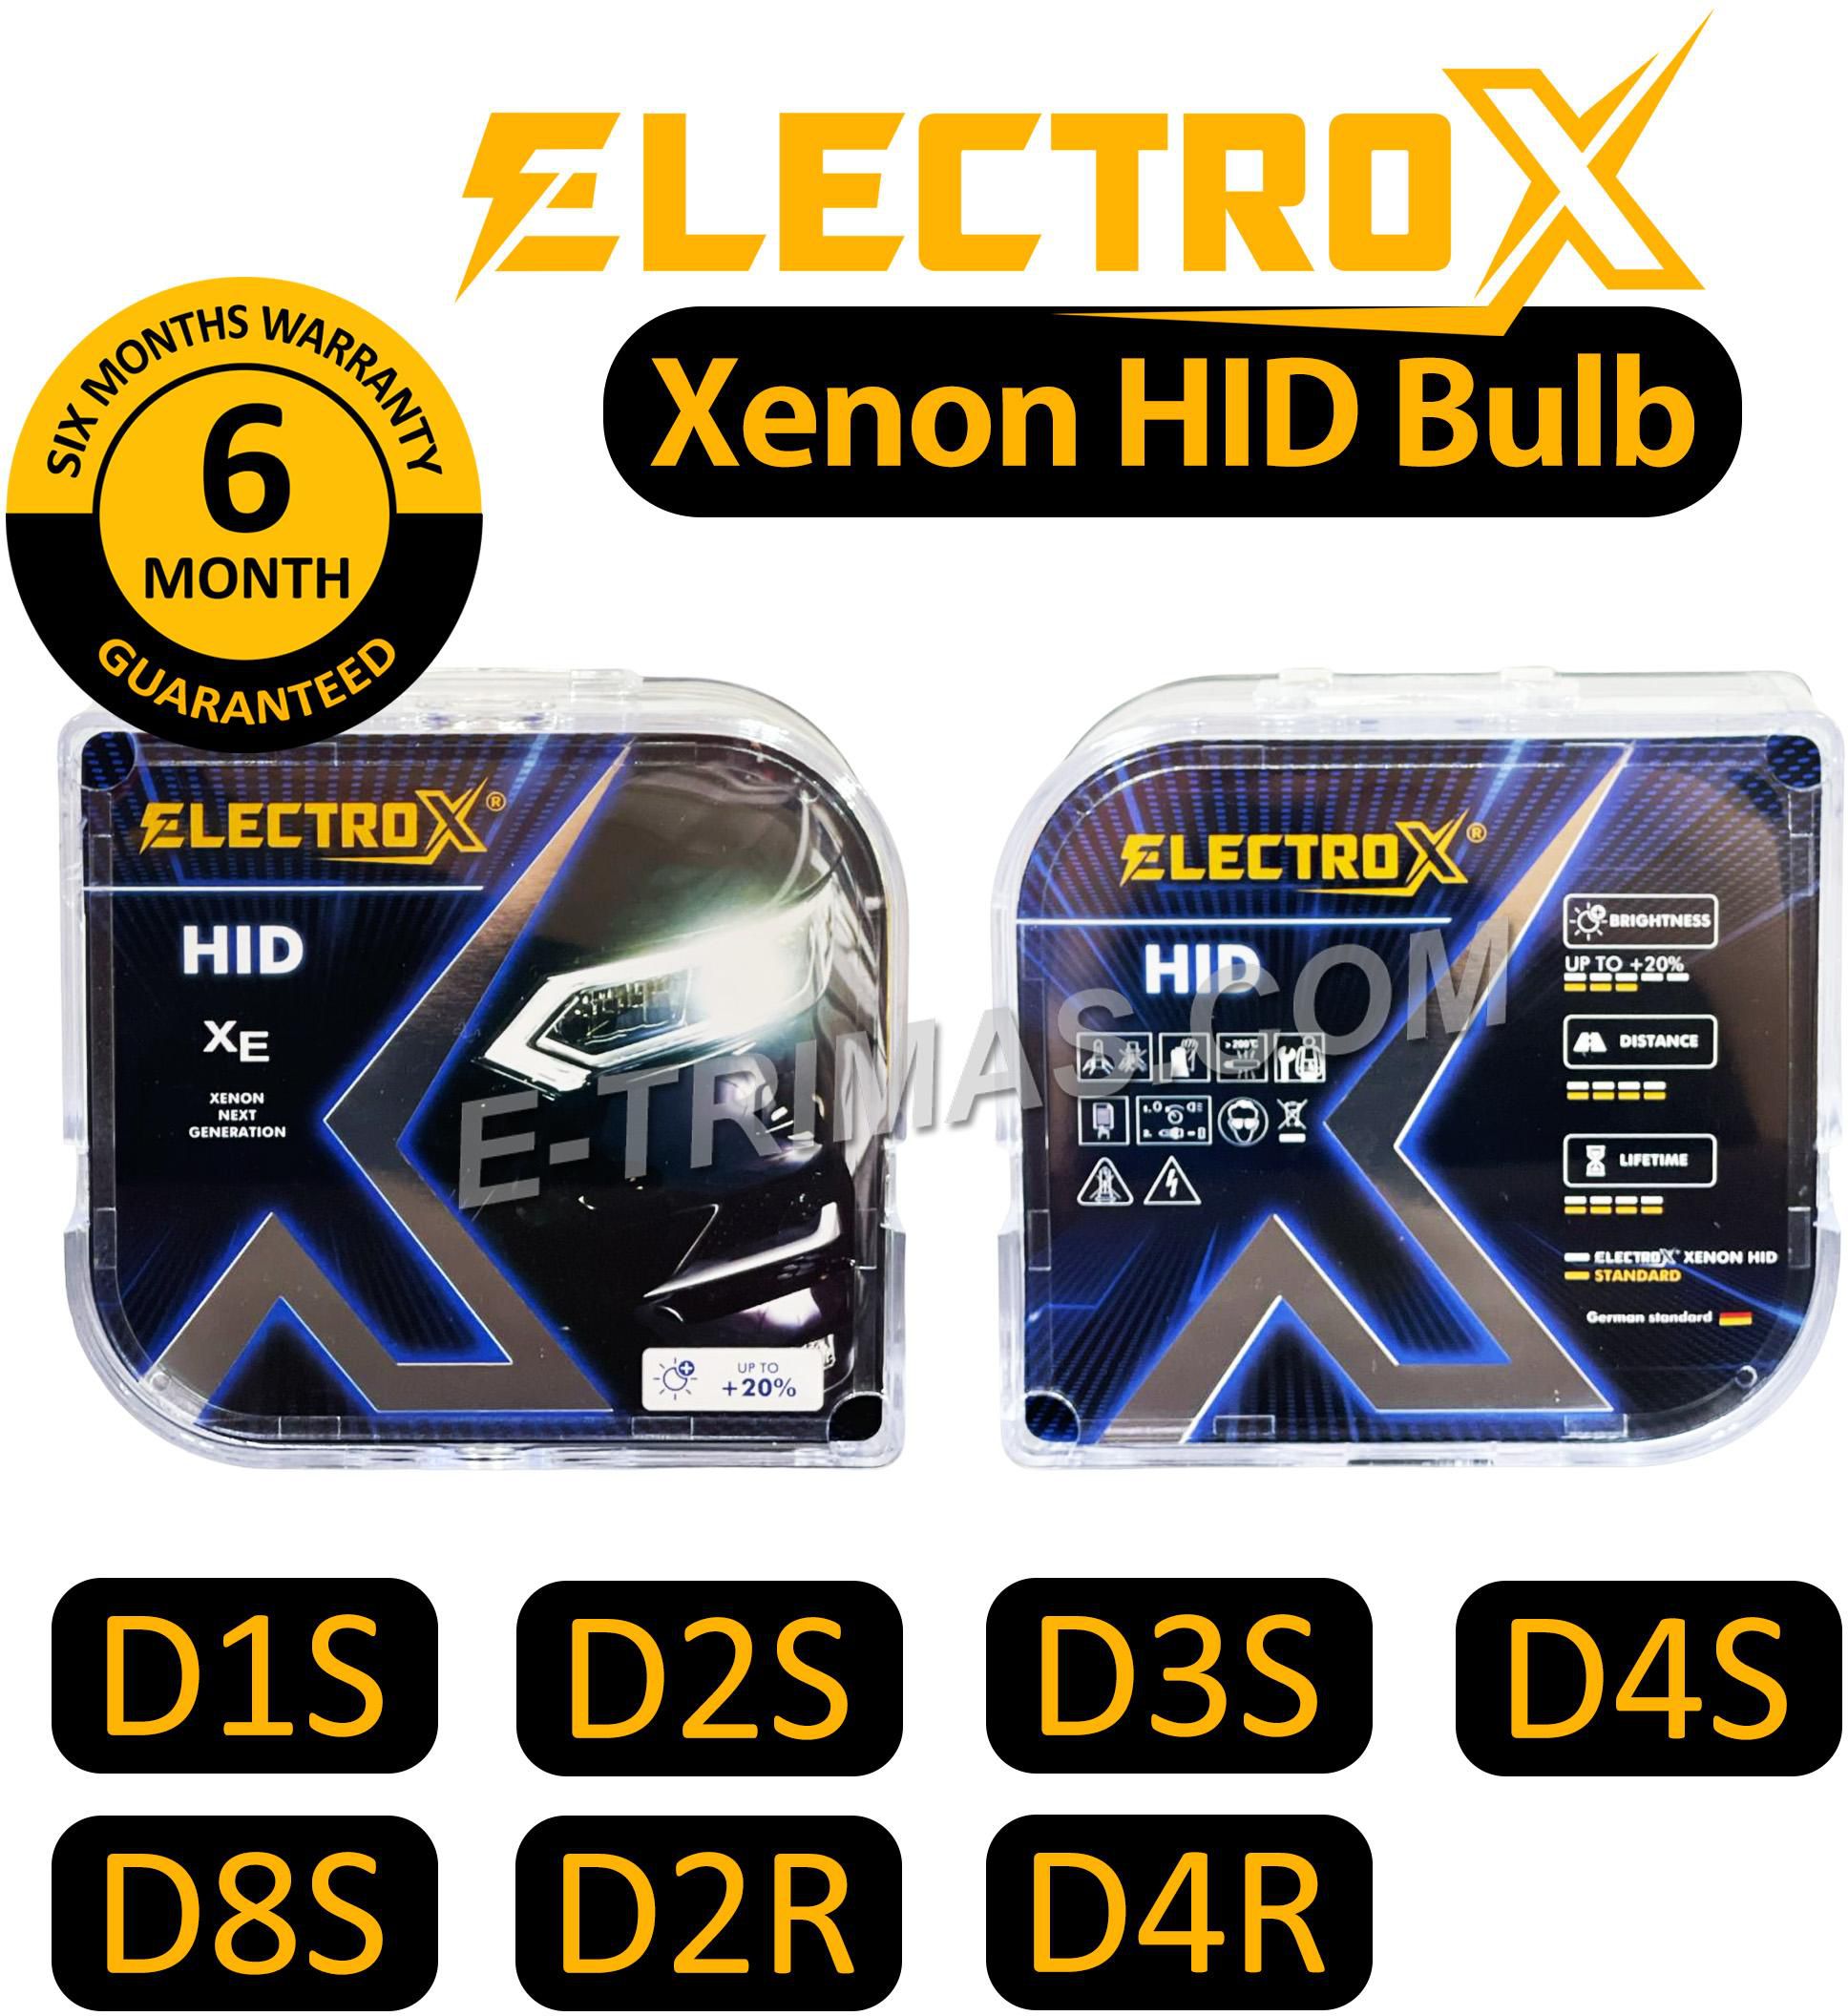 ELECTROX Xenon Next Generation HID Headlight Bulb 5500K Projector Reflector